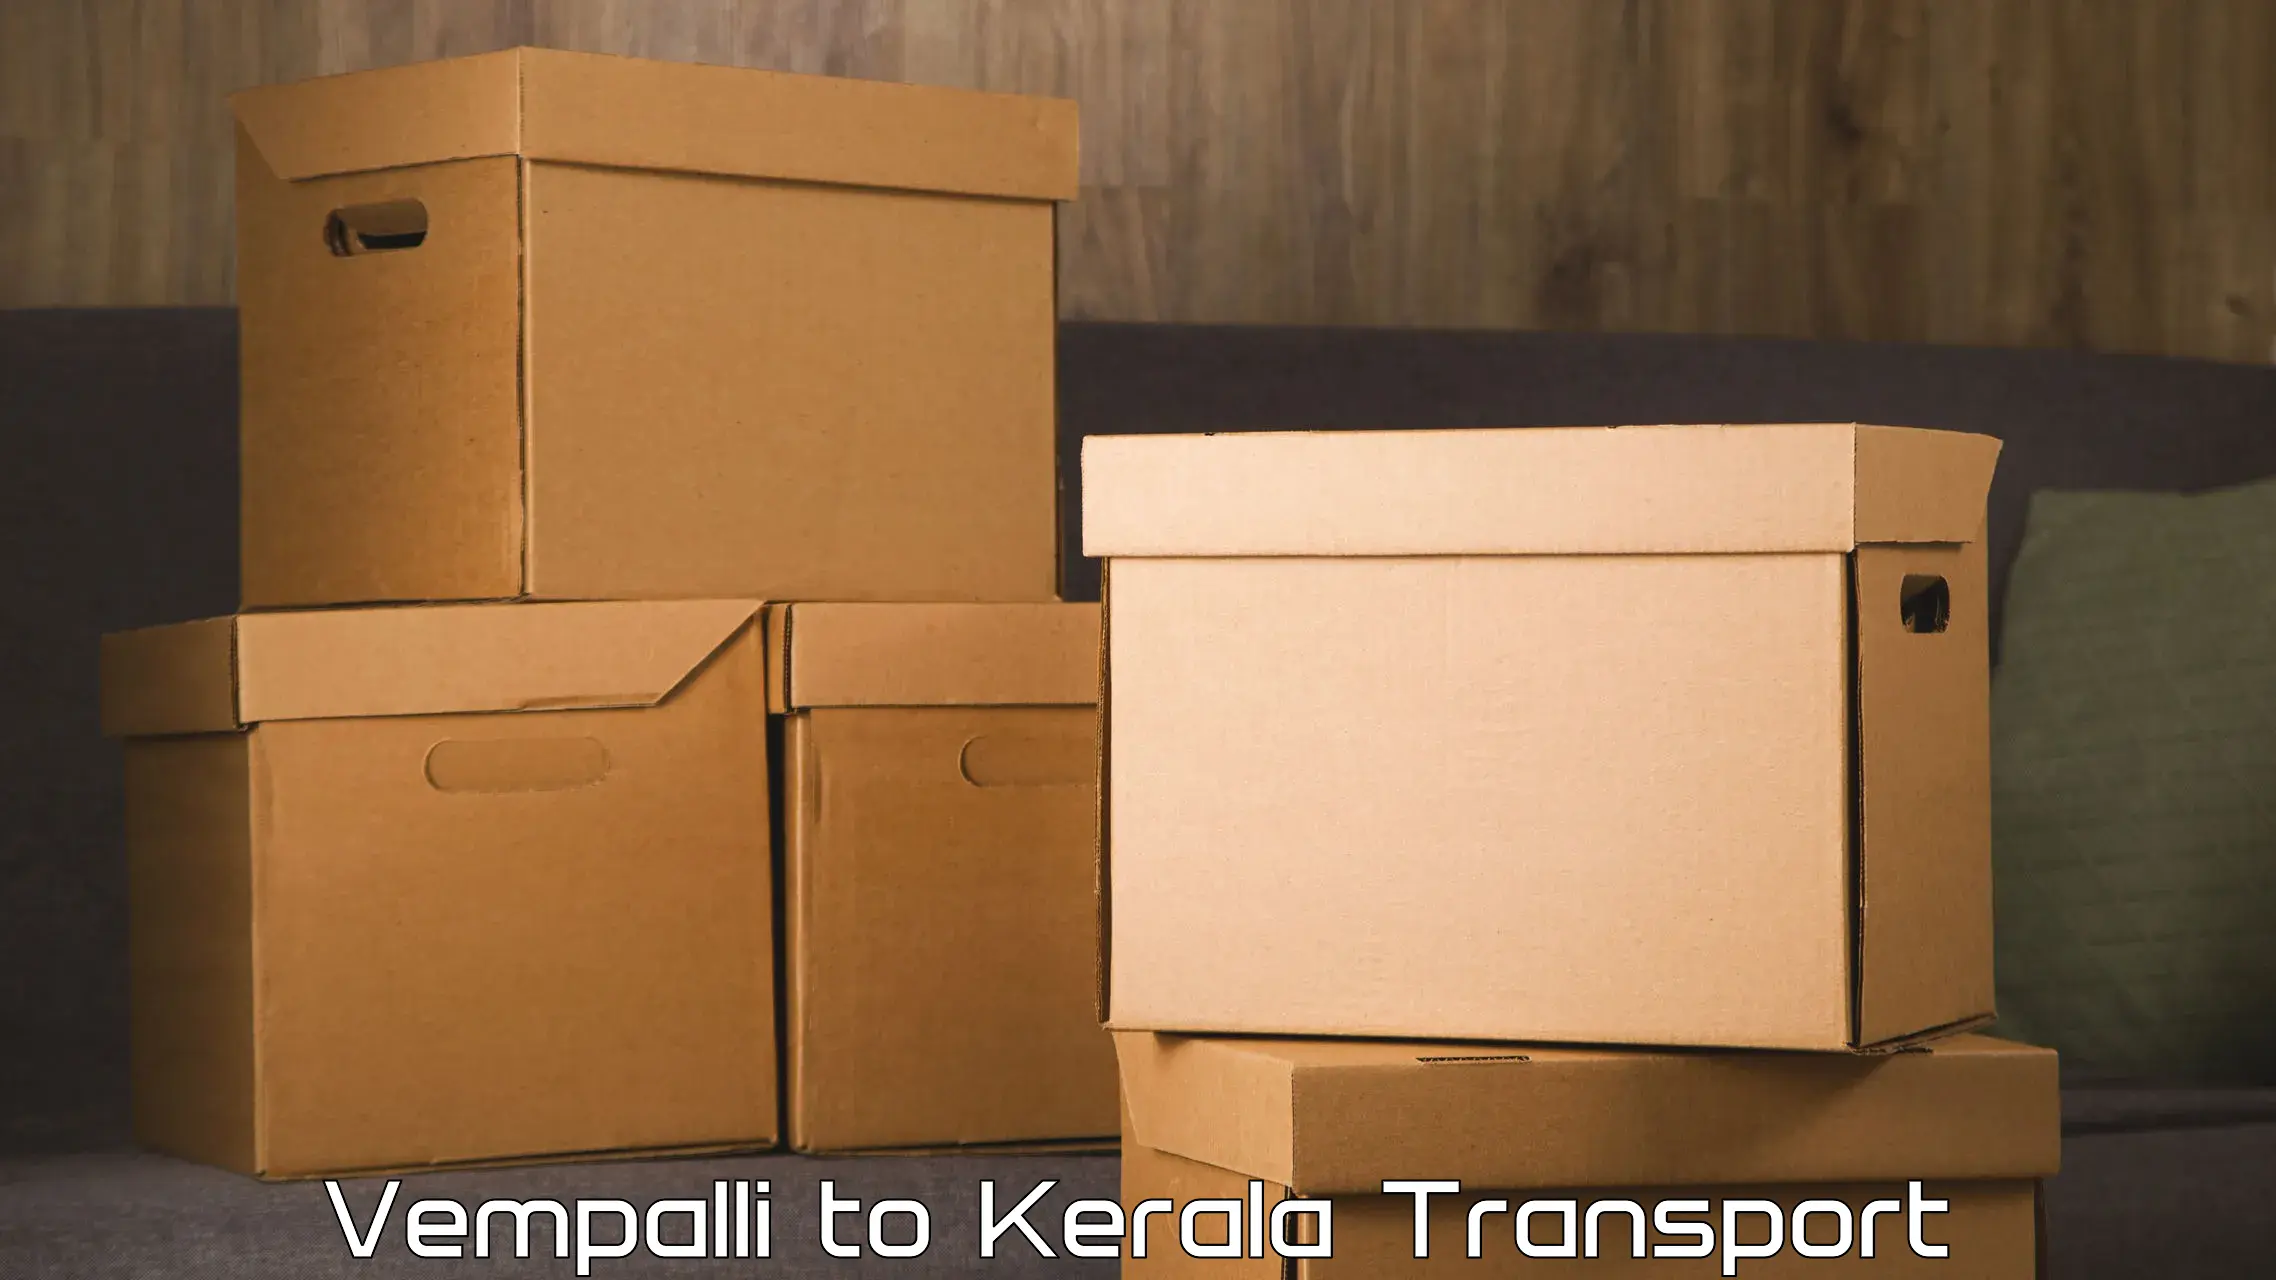 Two wheeler parcel service Vempalli to Kochi